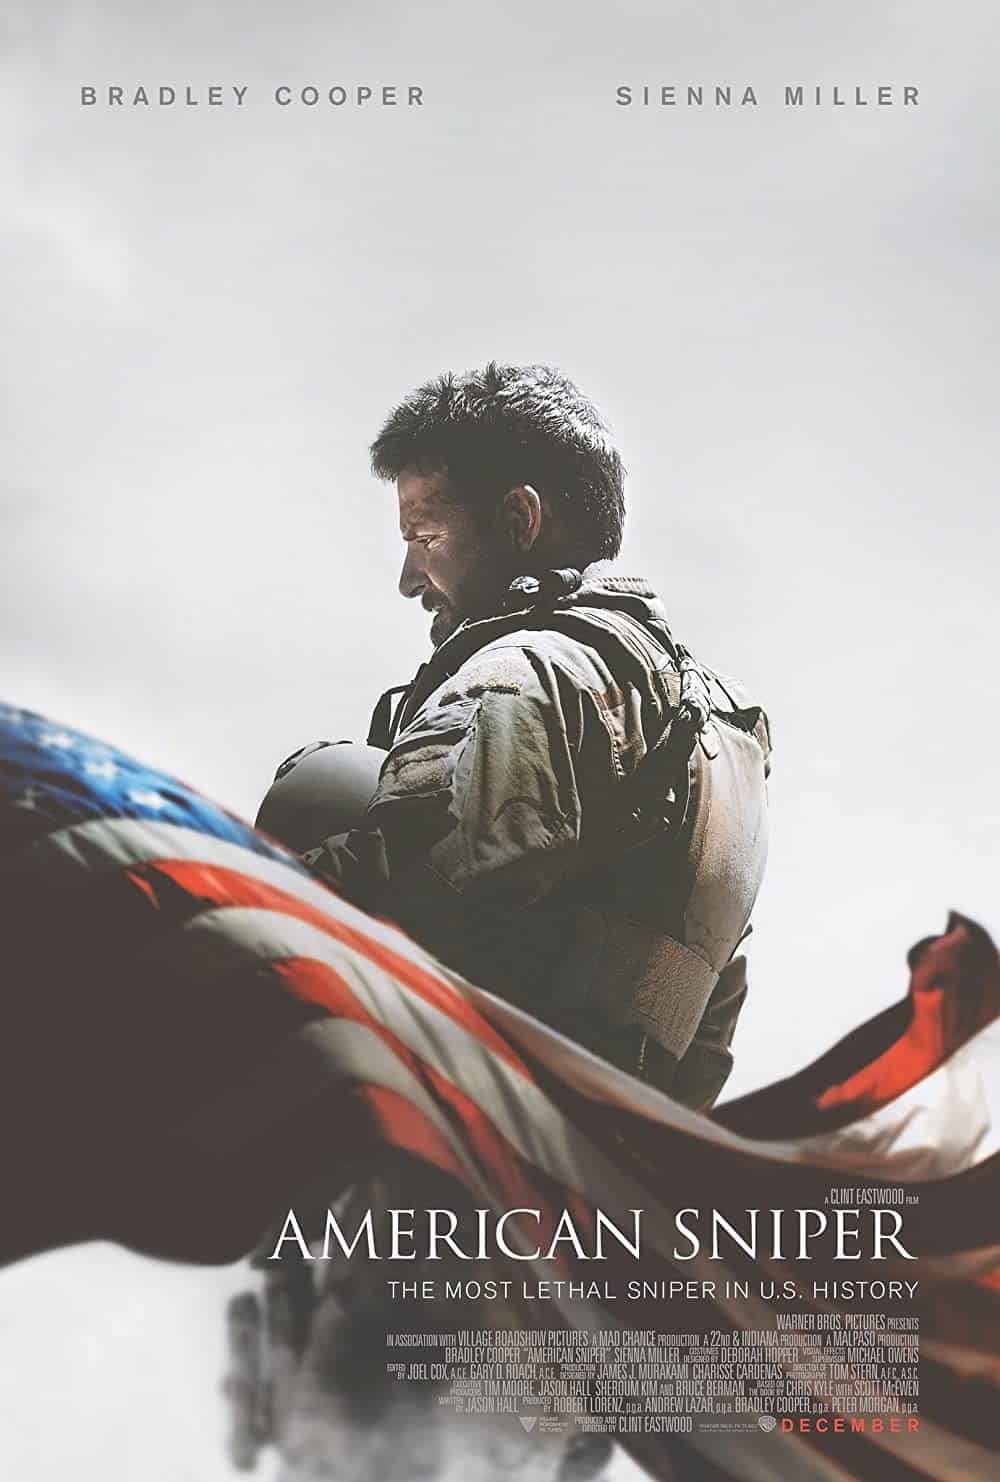 American Sniper (2014) Best Bradley Cooper Movies